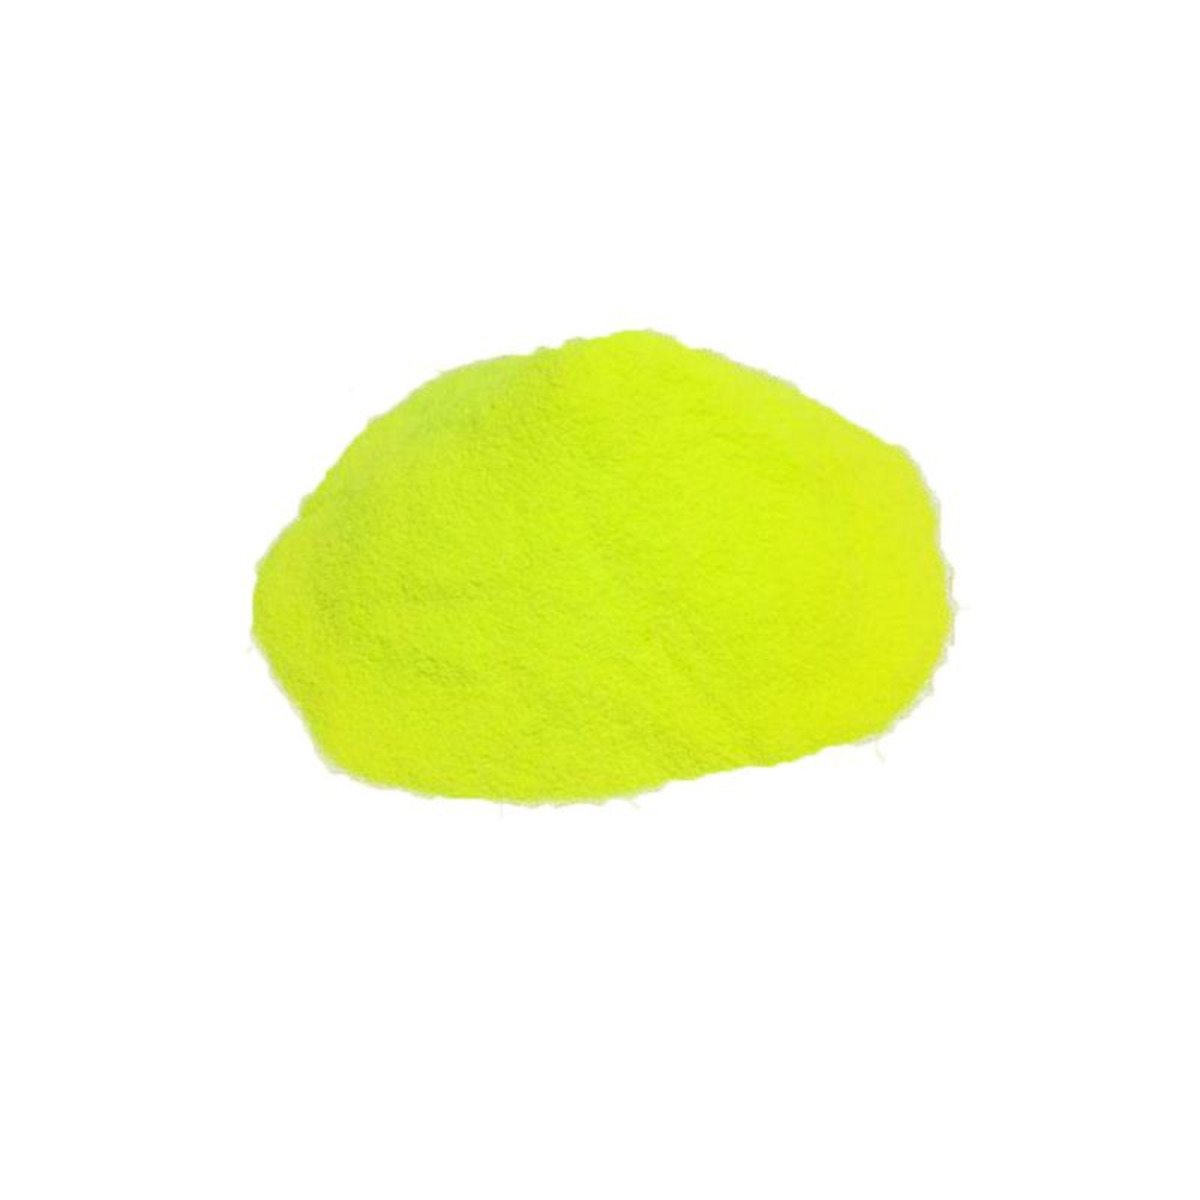 M2 Fishing Plastgum Powder Plasticizer For Ballast -  Phosphorescent Yellow - 100 g        